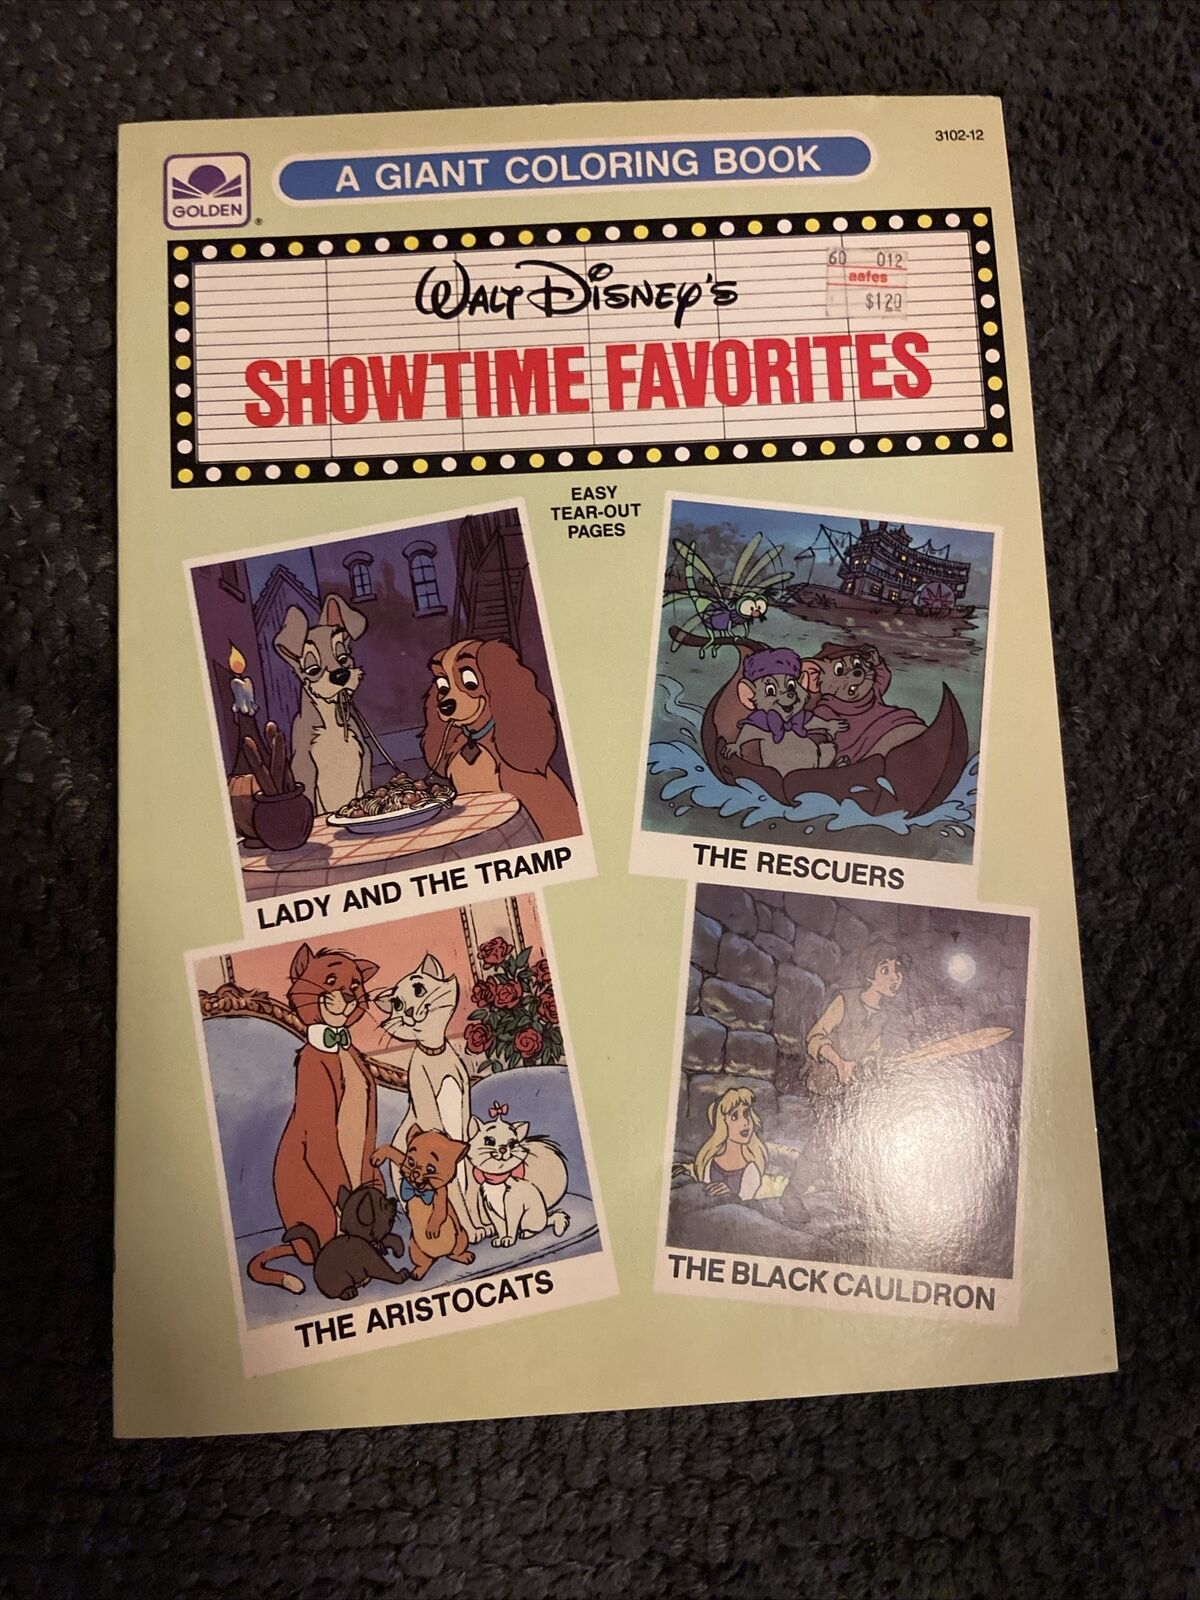 Vintage 1985 Golden A Giant Coloring Book Disney’s Showtime Favorites